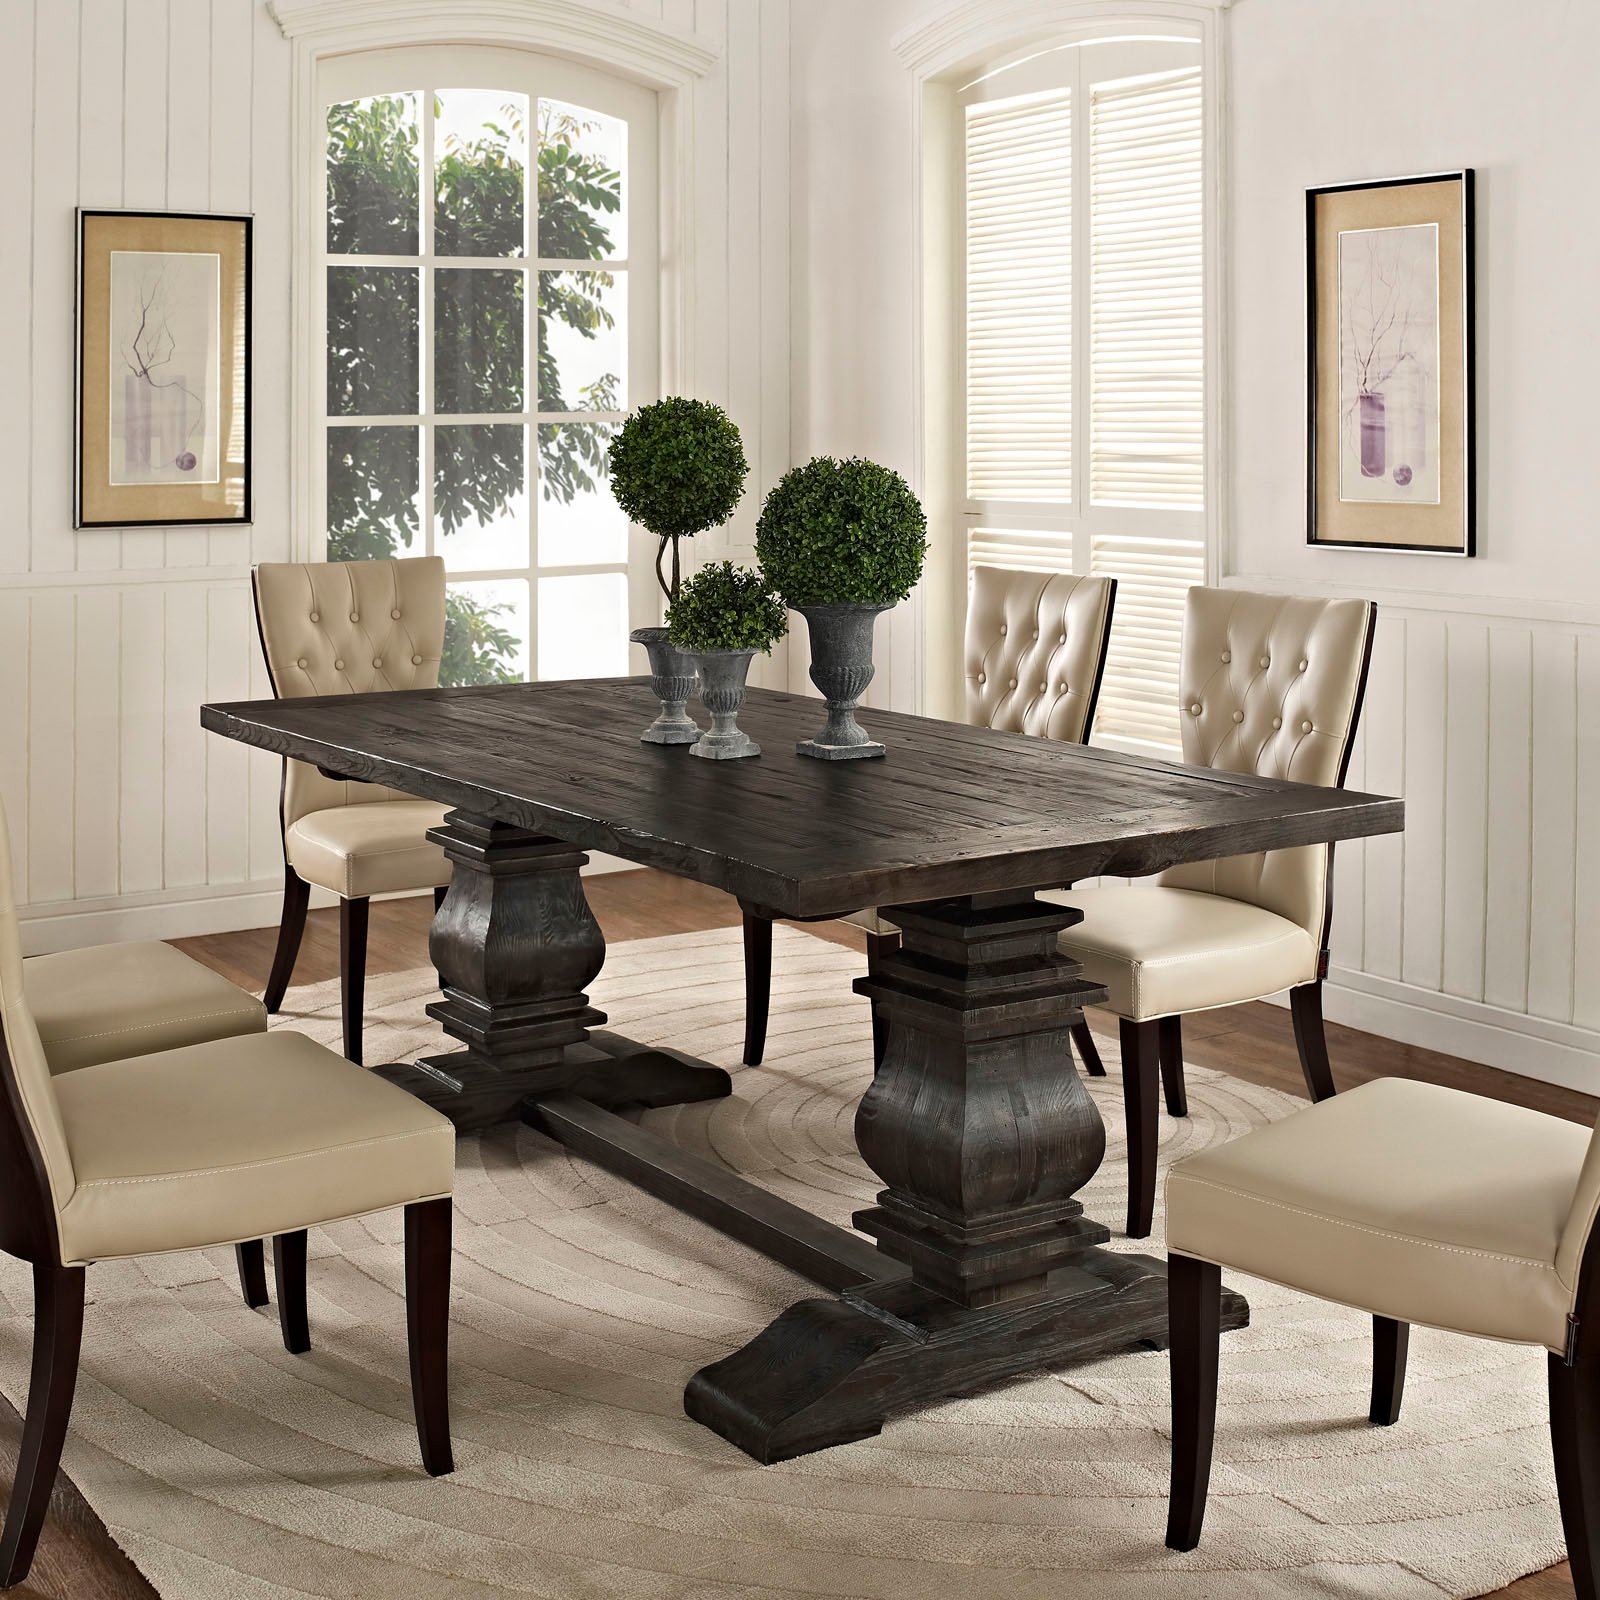 Обеденный стол Sierra Dining Table - whitewashed